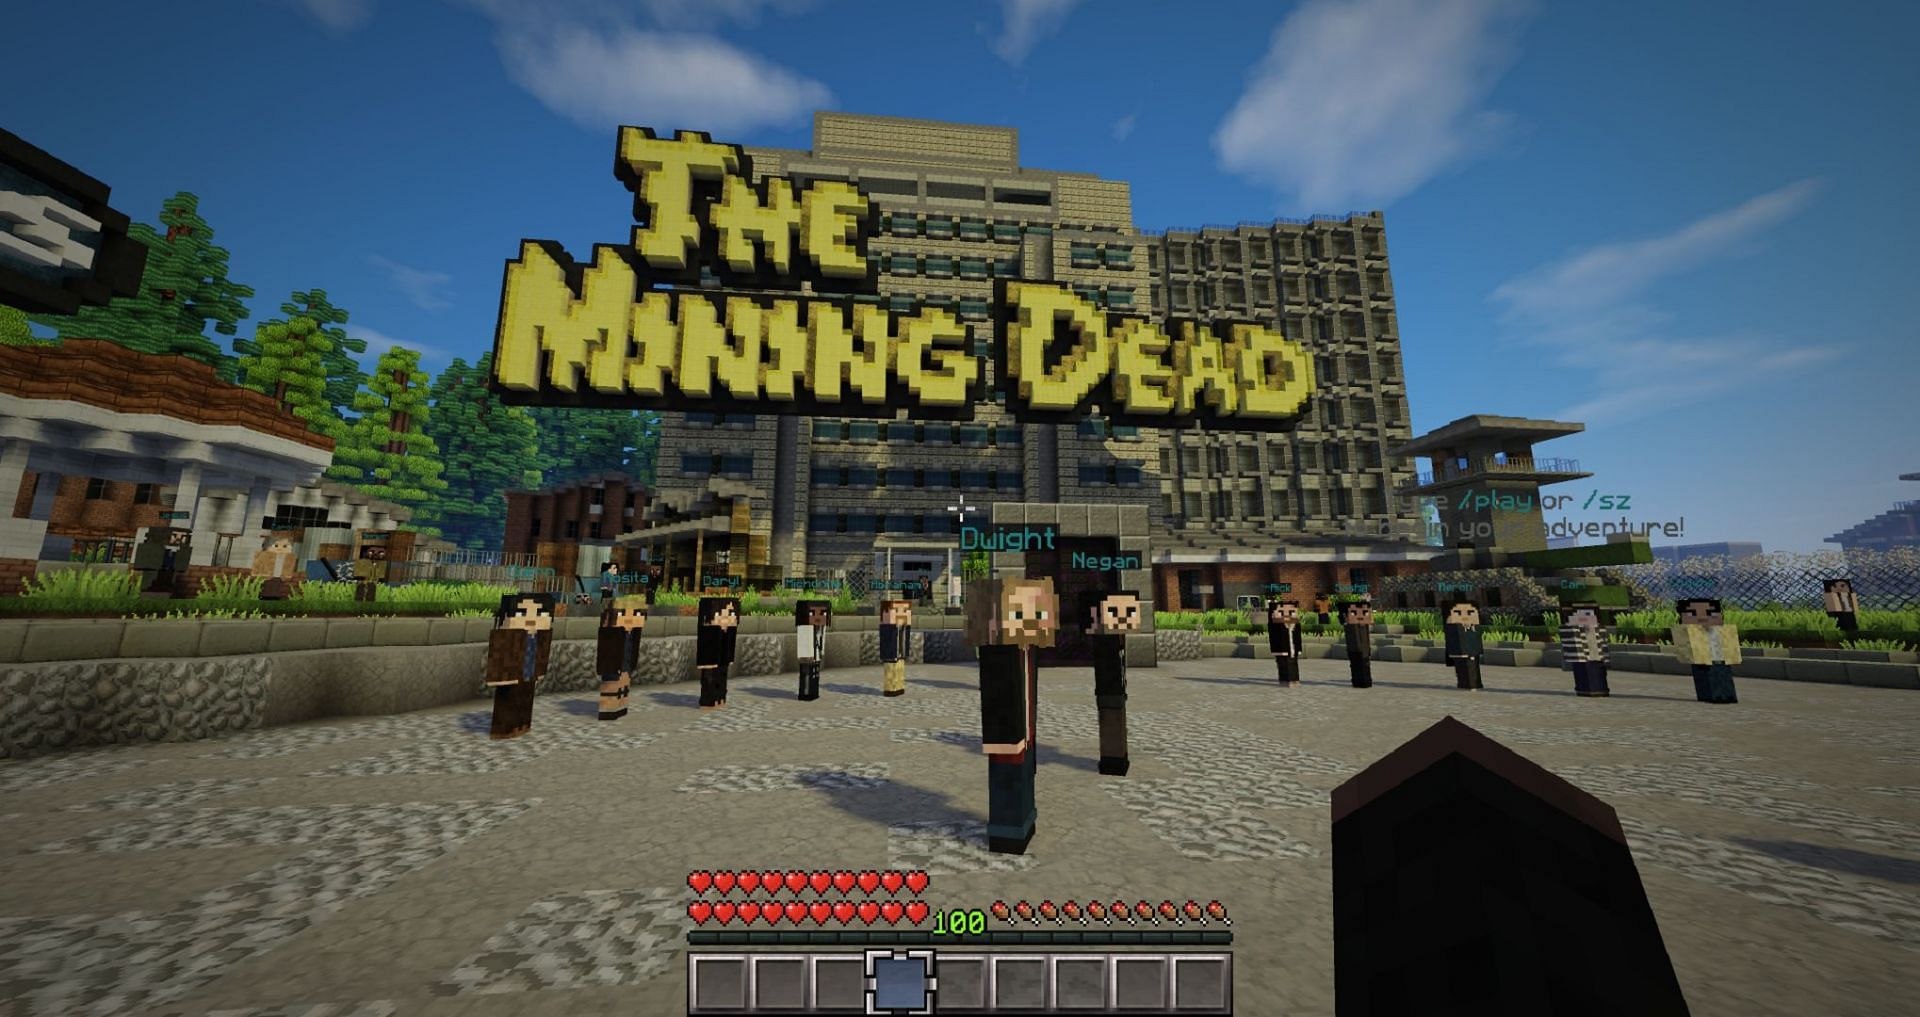 Havoc Games'  popular The Mining Dead World (Image via Havoc Games)